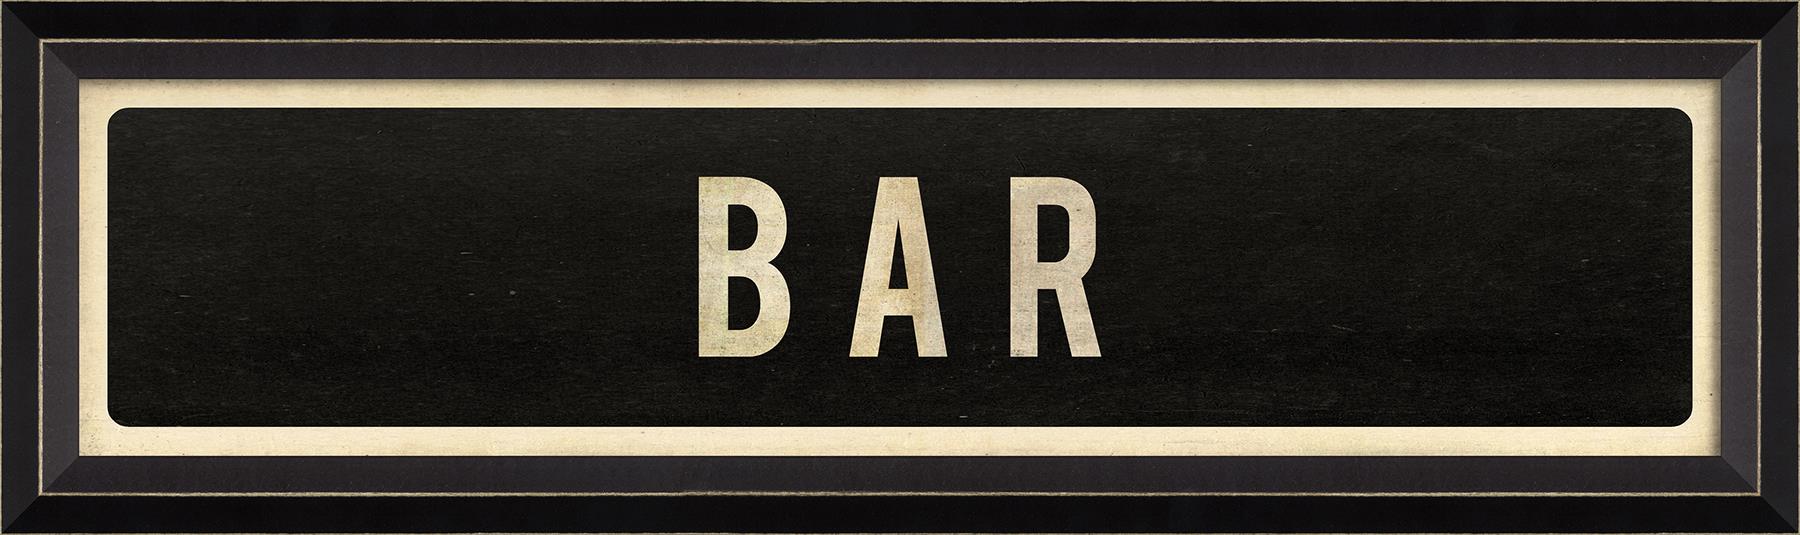 Street Sign - Bar Themed